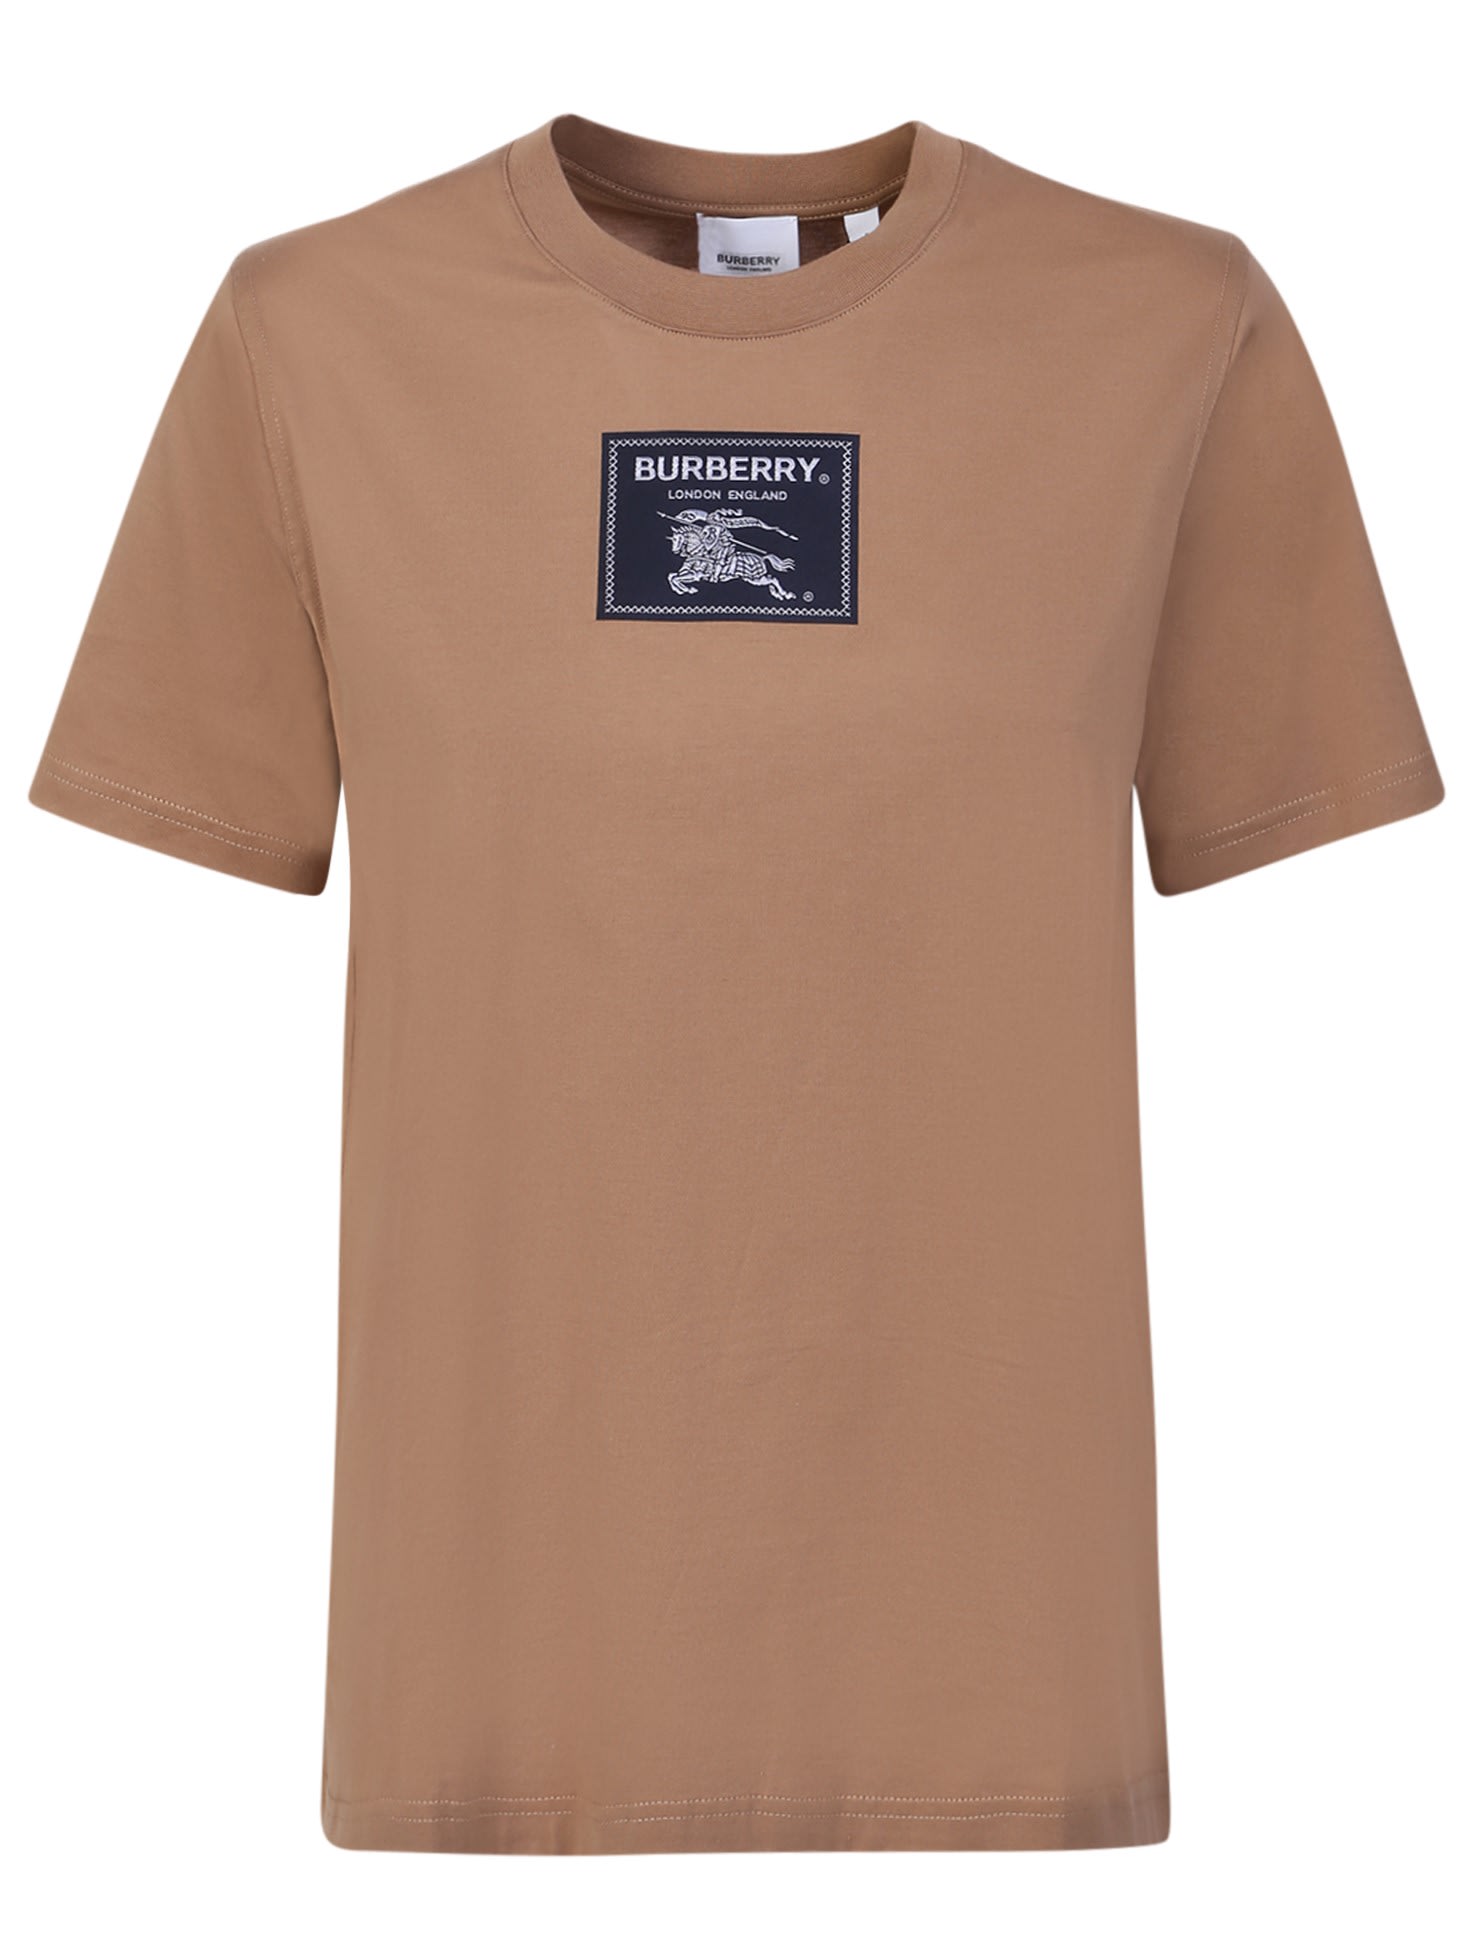 Burberry Prorsum Label Beige T-shirt